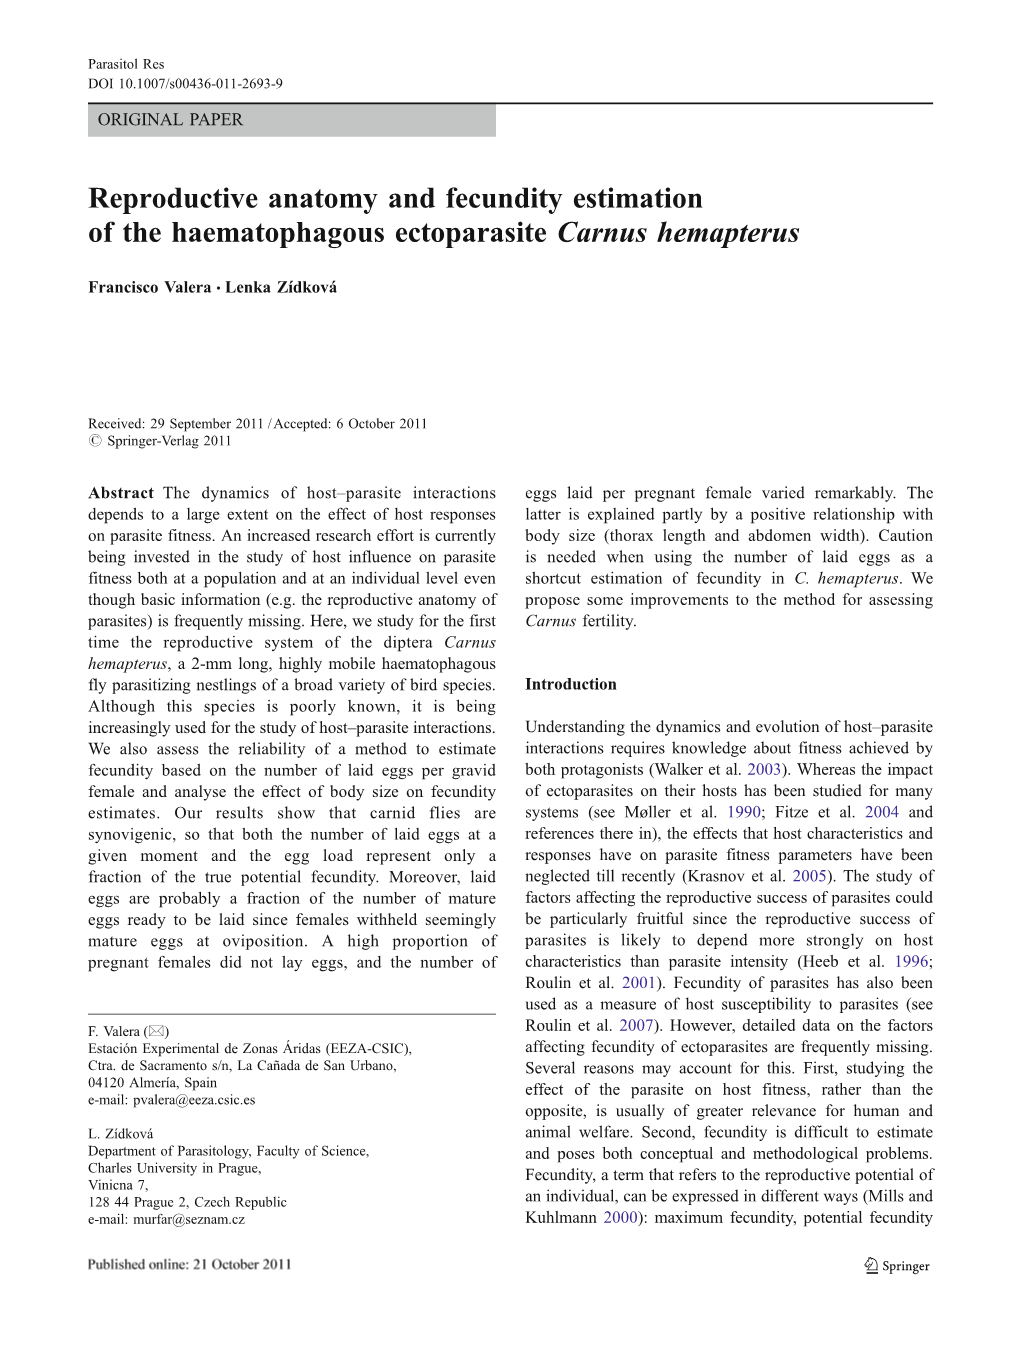 Reproductive Anatomy and Fecundity Estimation of the Haematophagous Ectoparasite Carnus Hemapterus